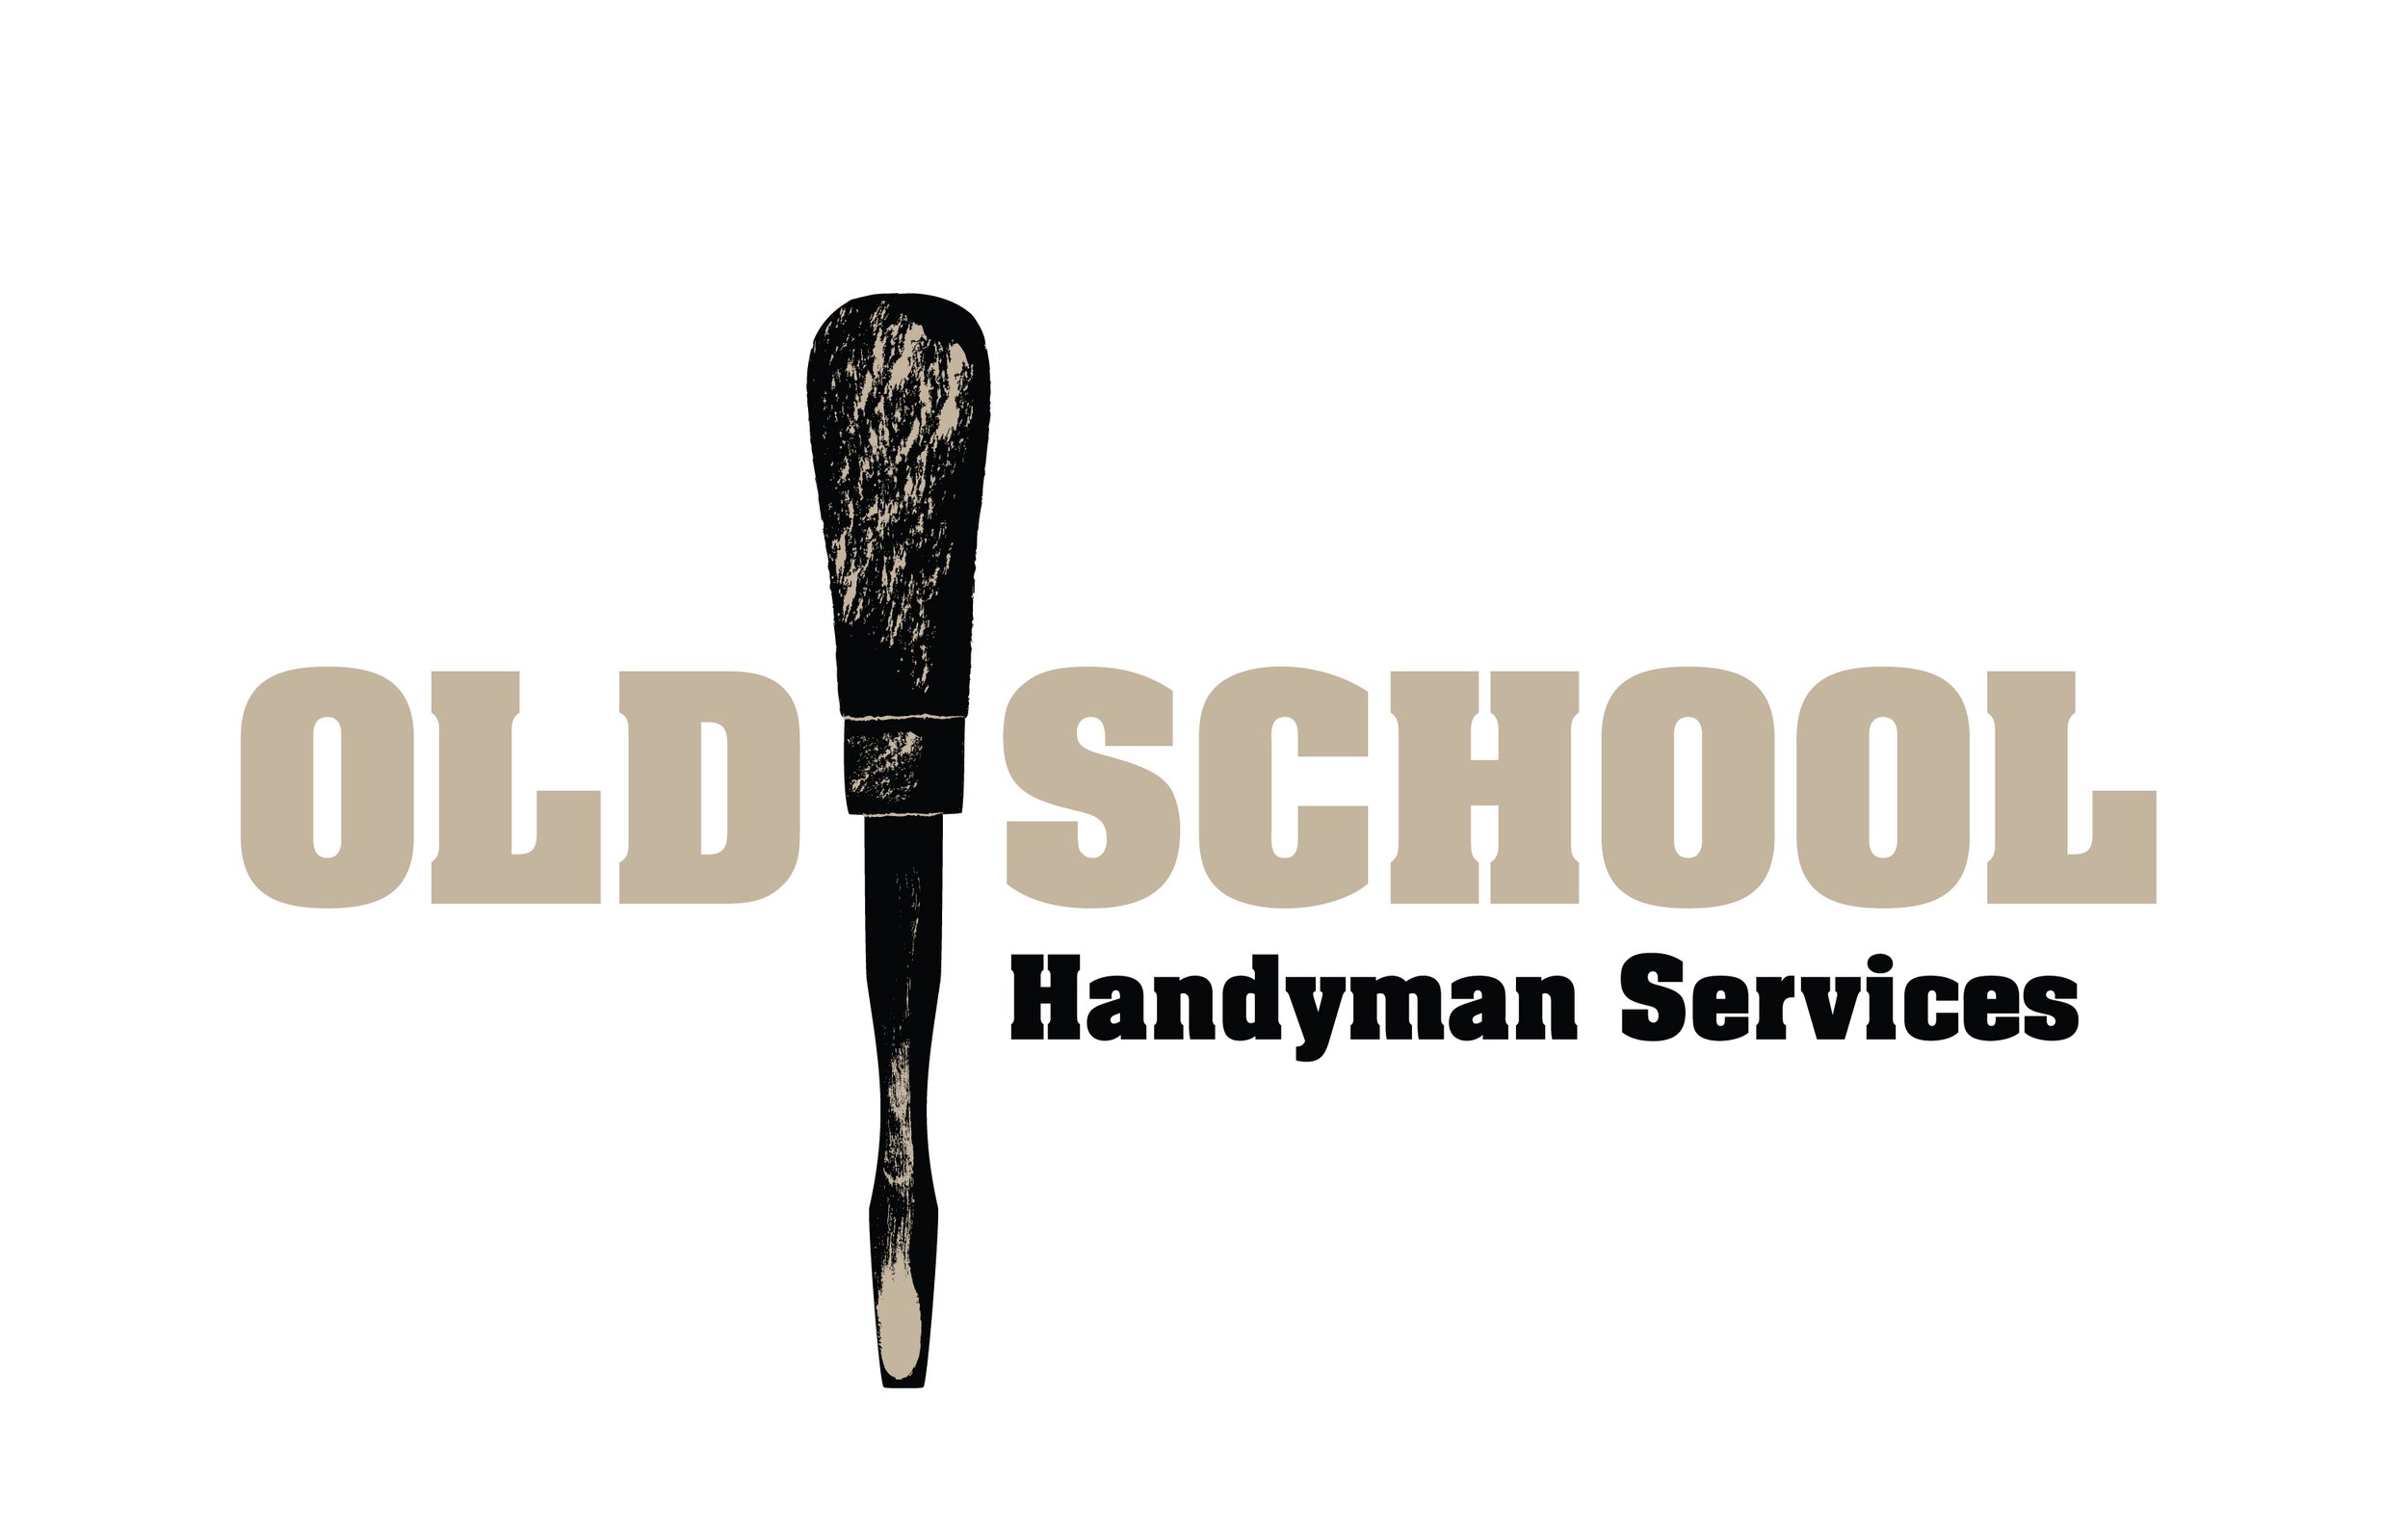 Old School Handyman Services 2color logo with screwdriver